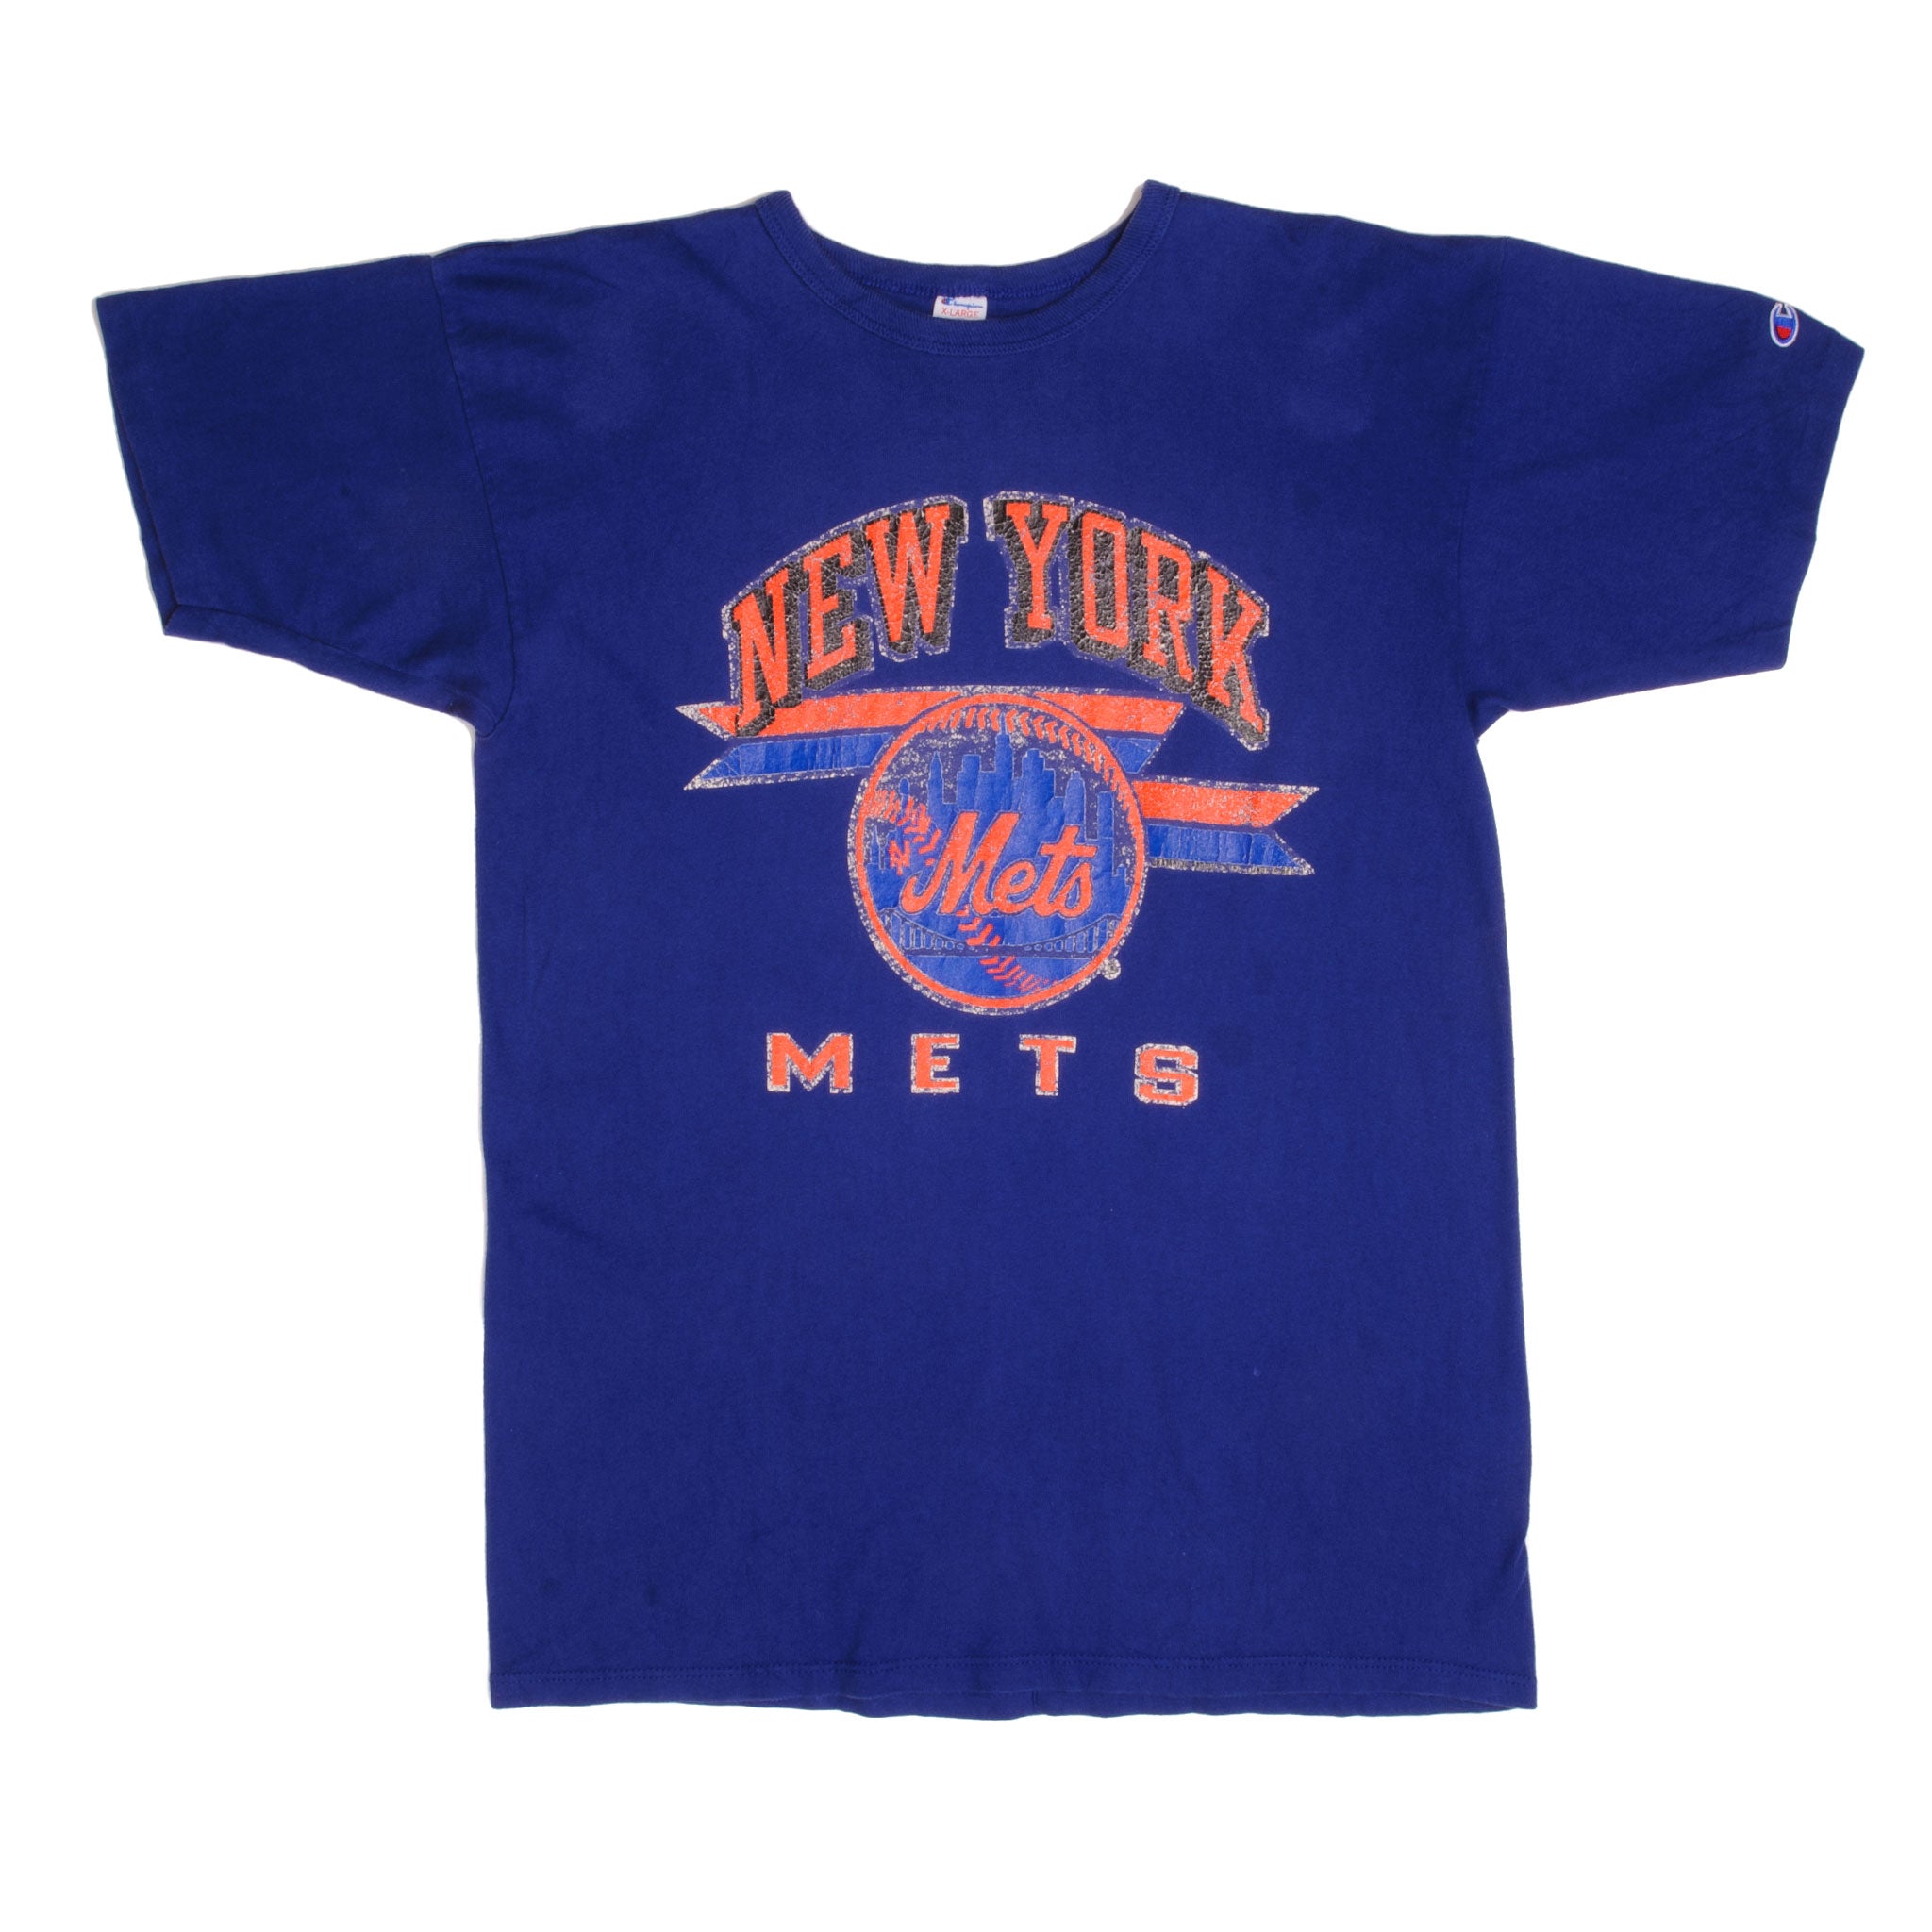 STARTER, Shirts, Ny Yankees Jersey Vintage 9s Starter